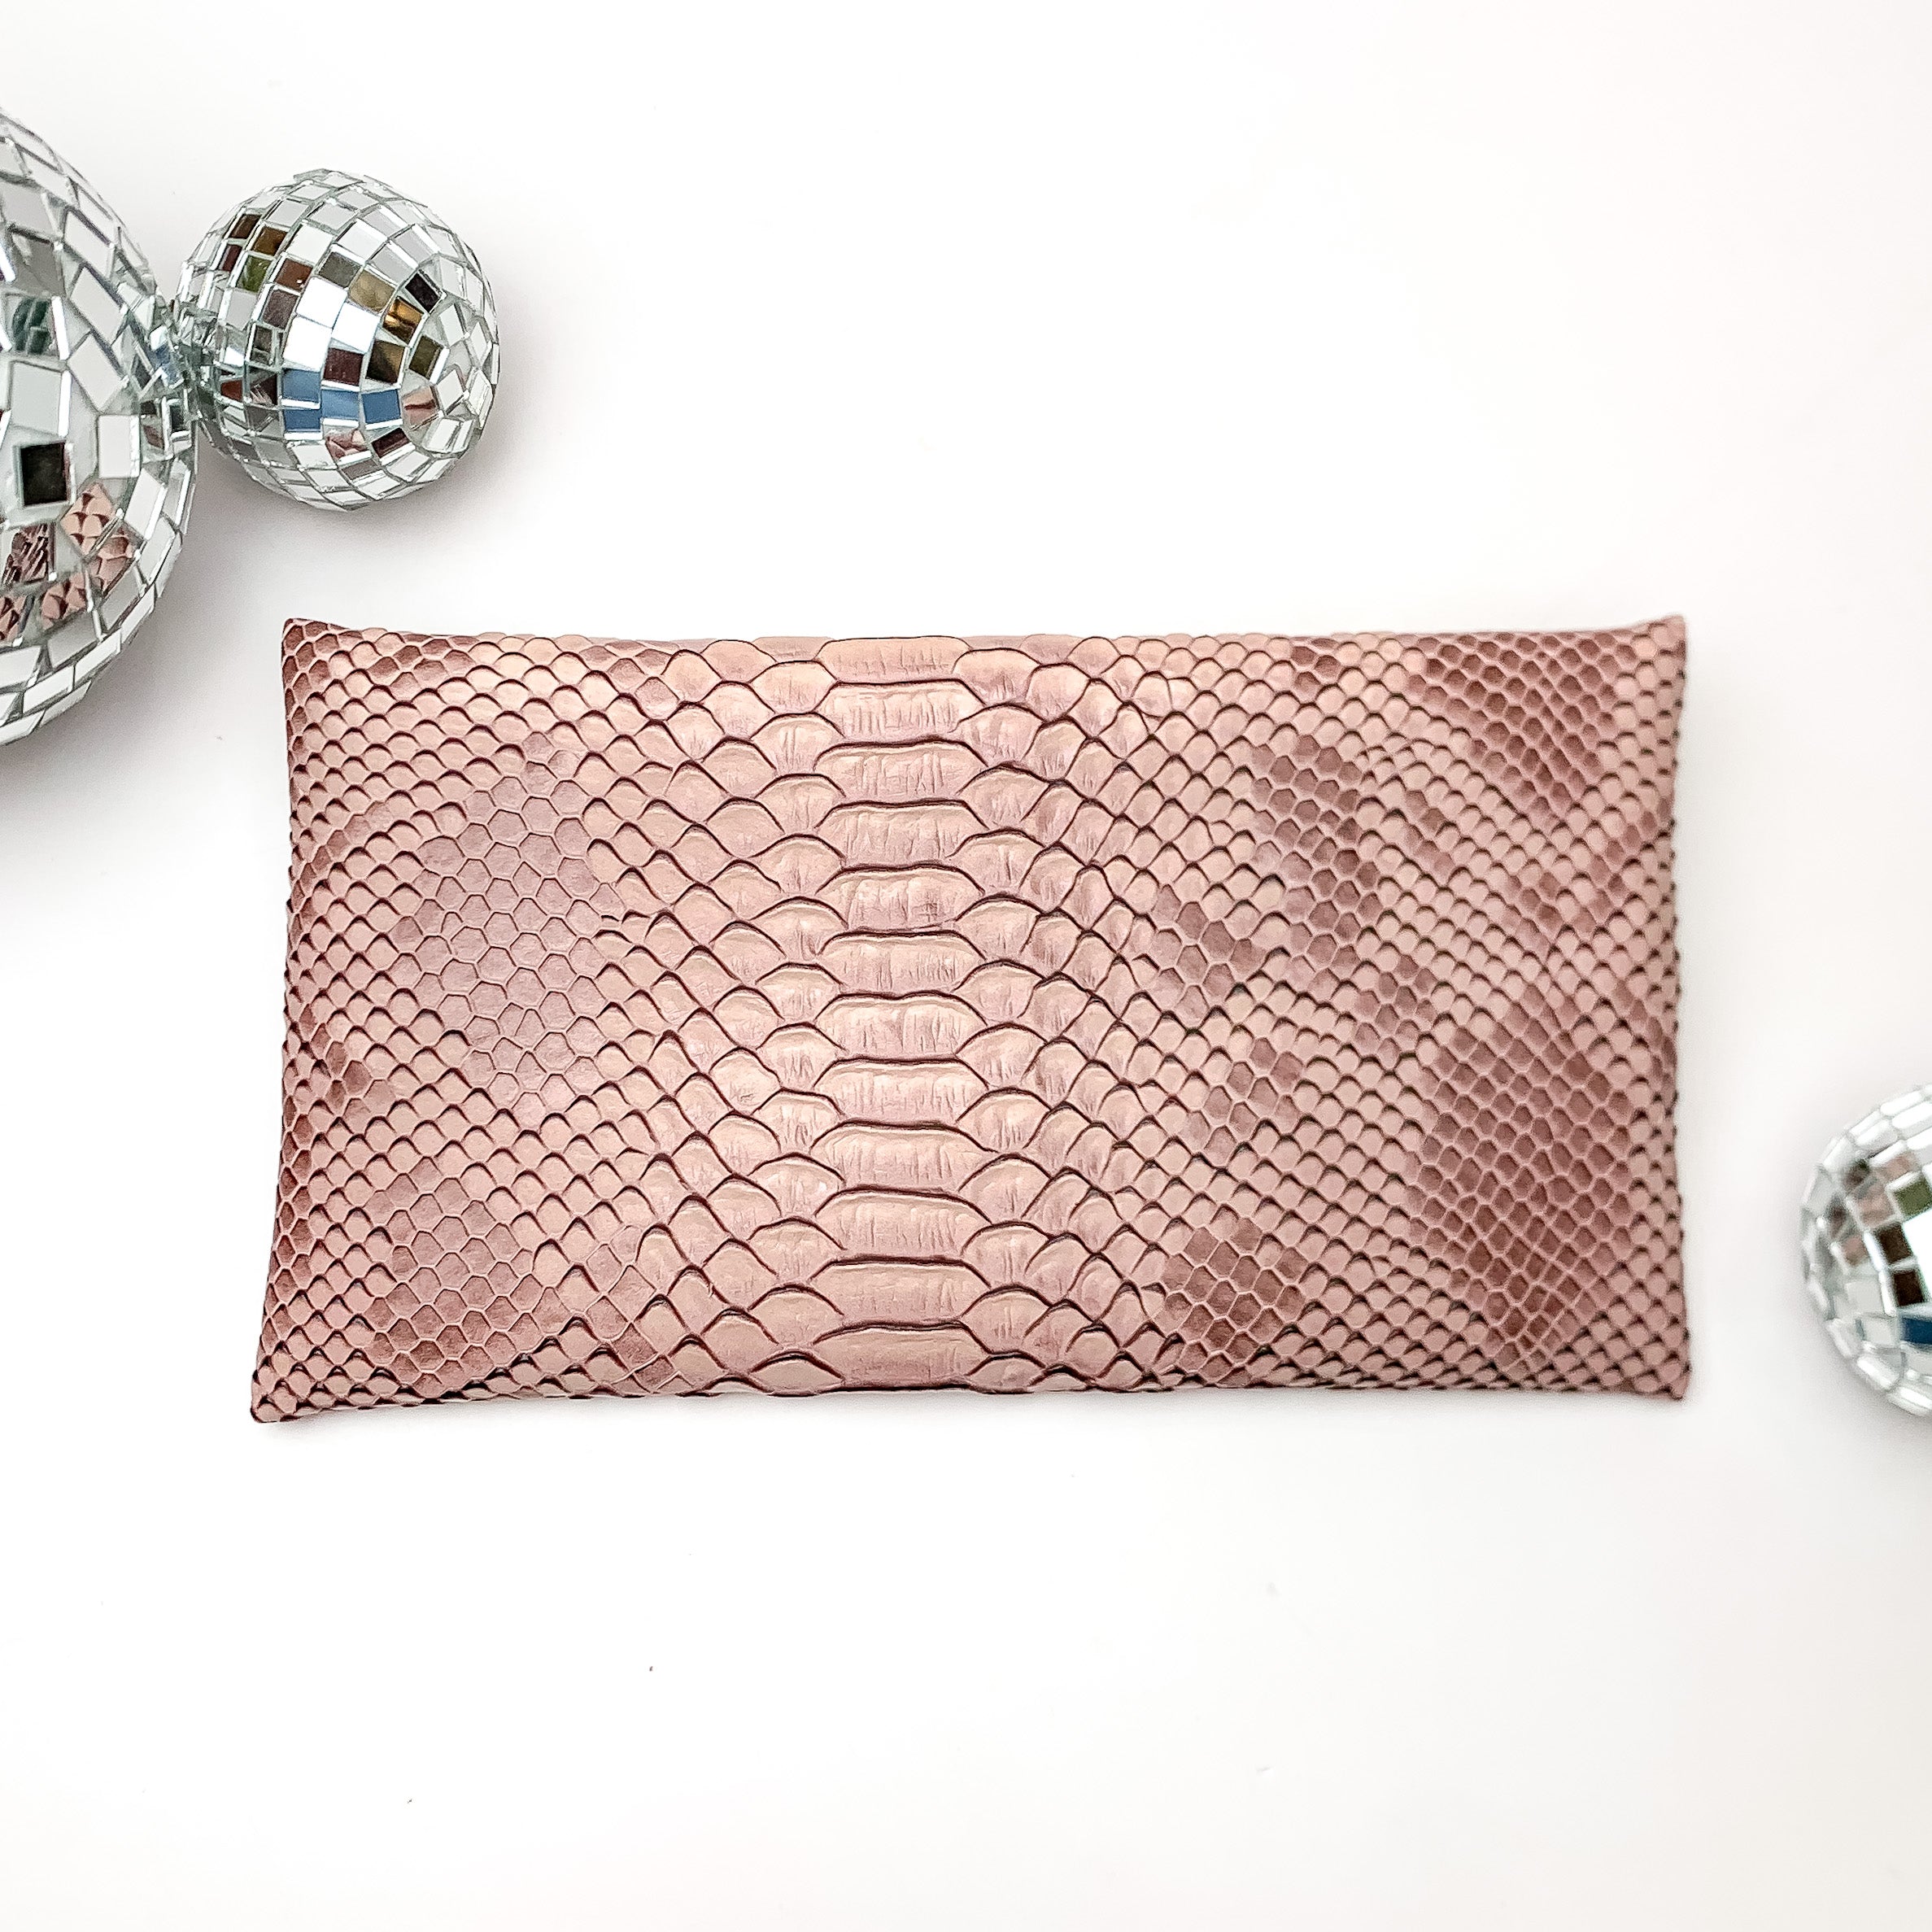 Makeup Junkie | Mini Copperazzi Lay Flat Bag in Dusty Pink Snake Print